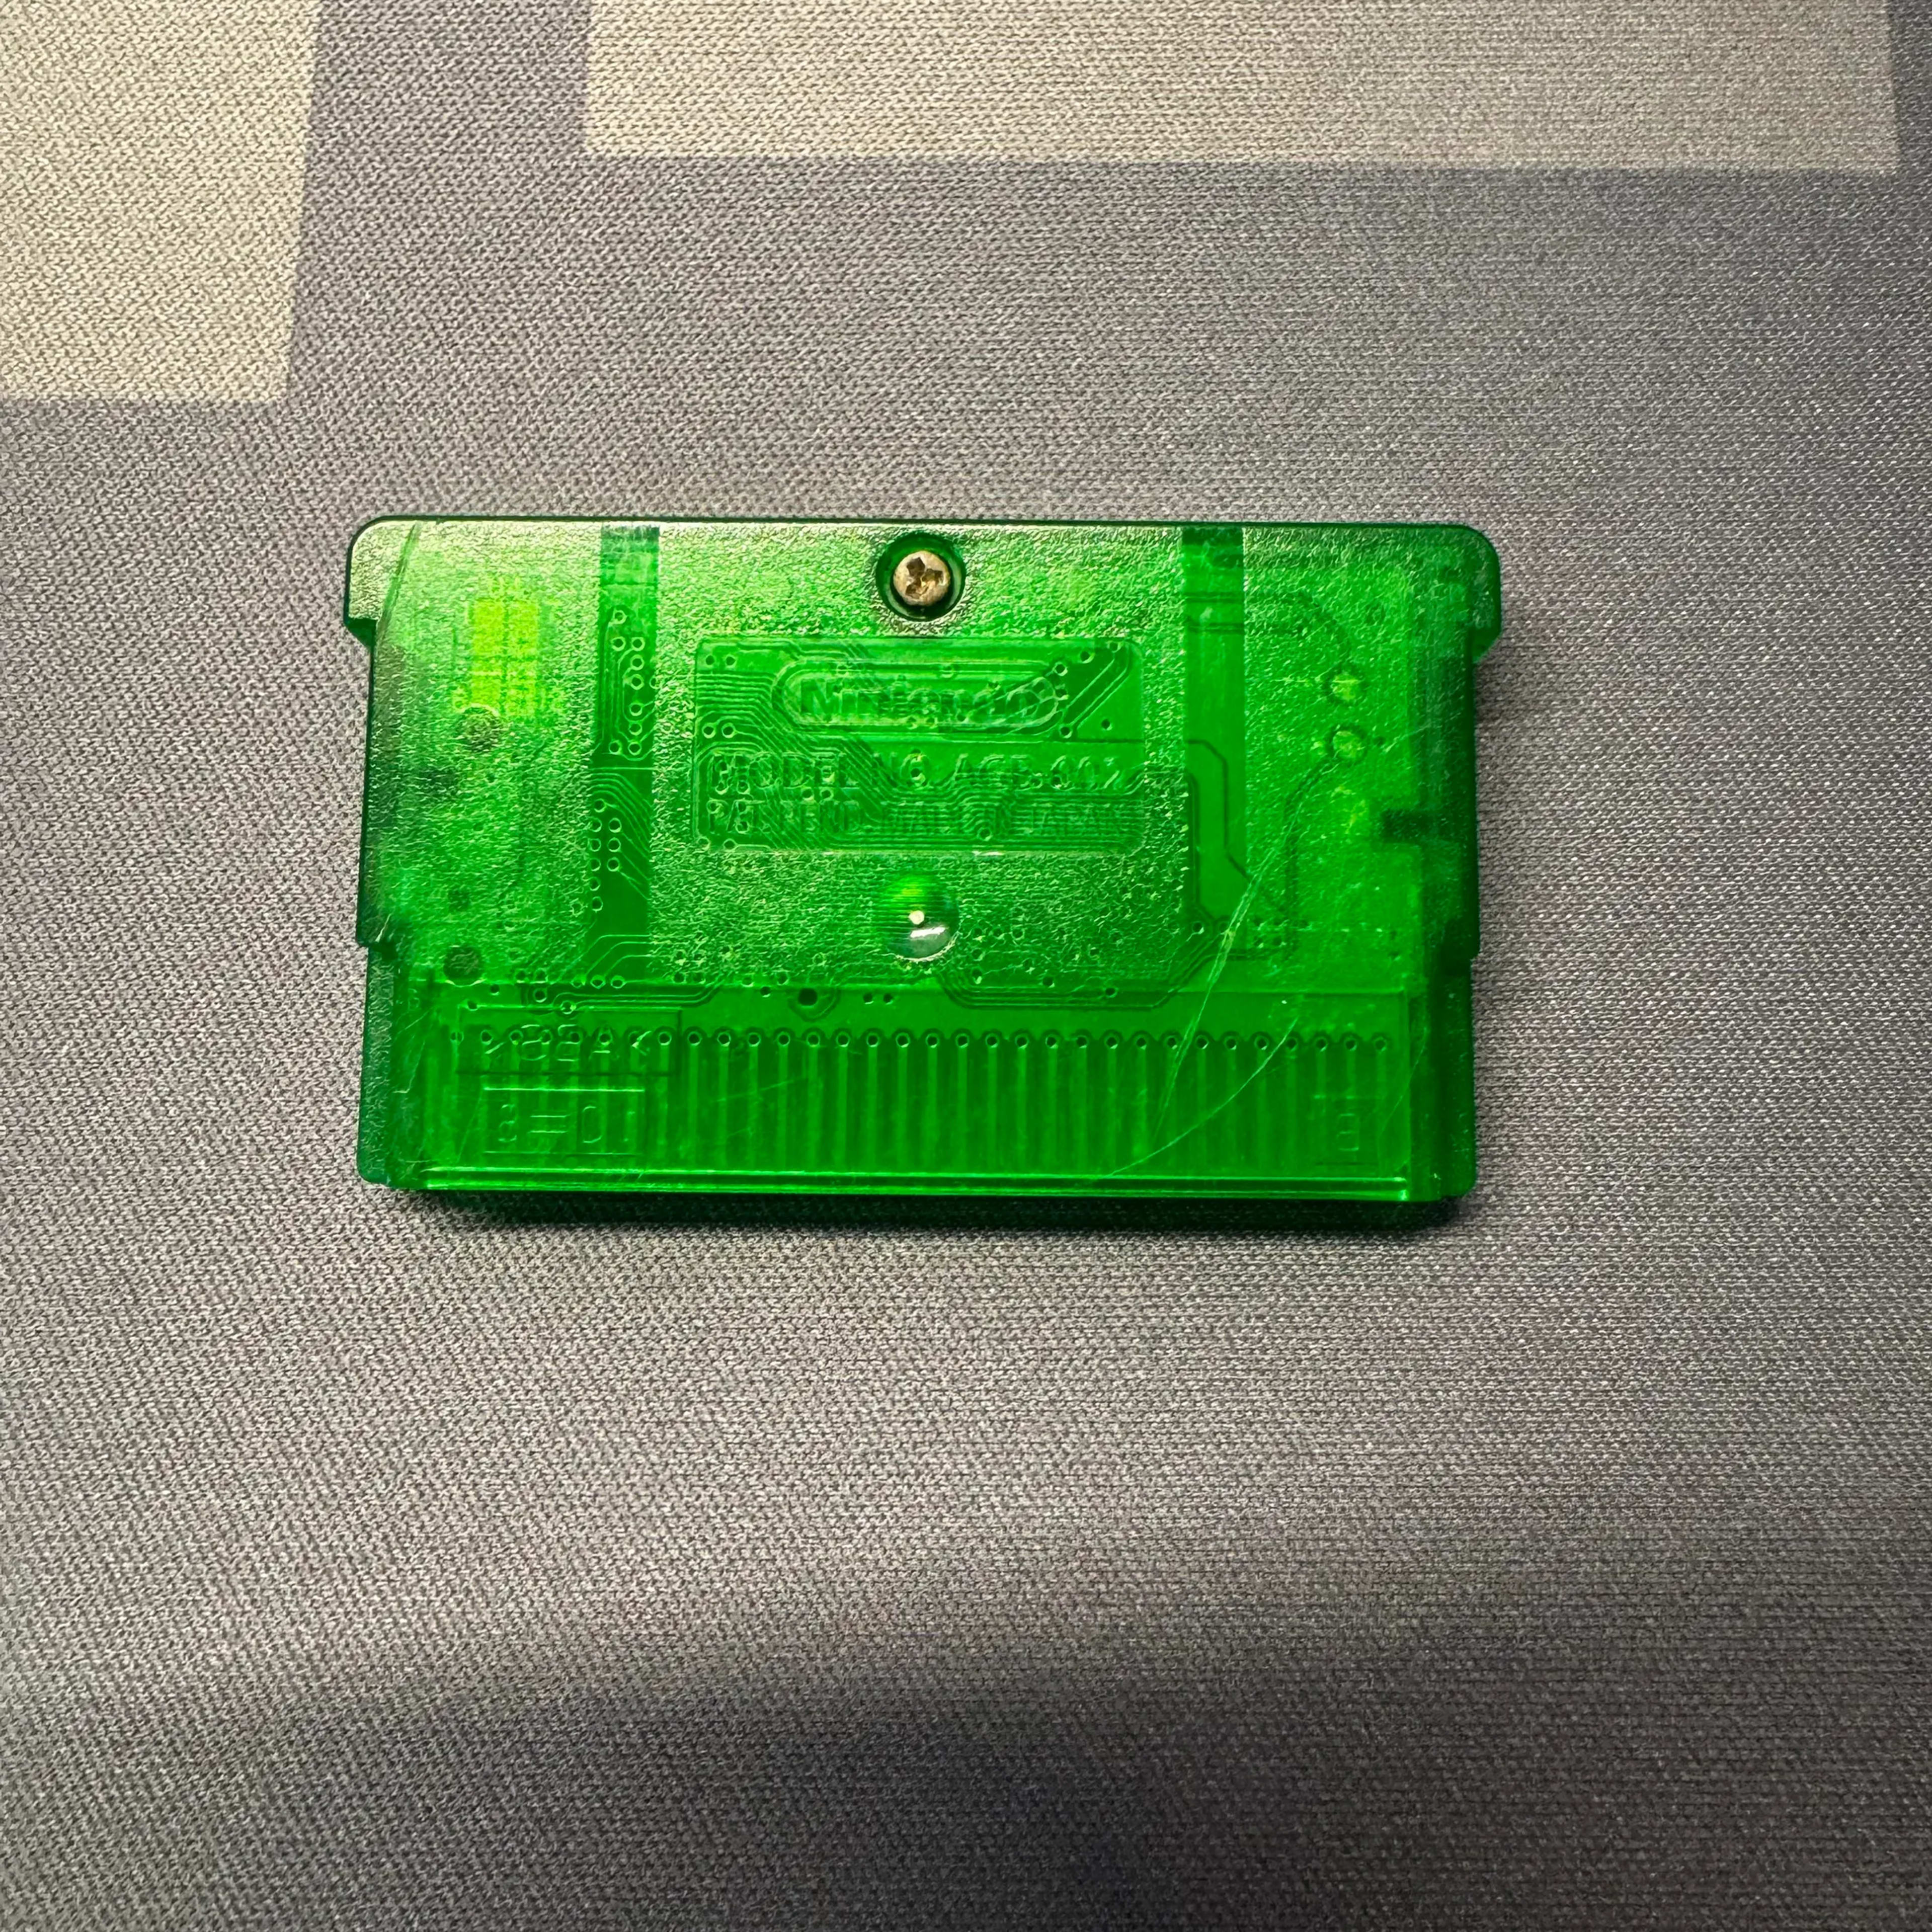 Authentic Japanese Pokemon Emerald Version Cartridge w/ New Battery